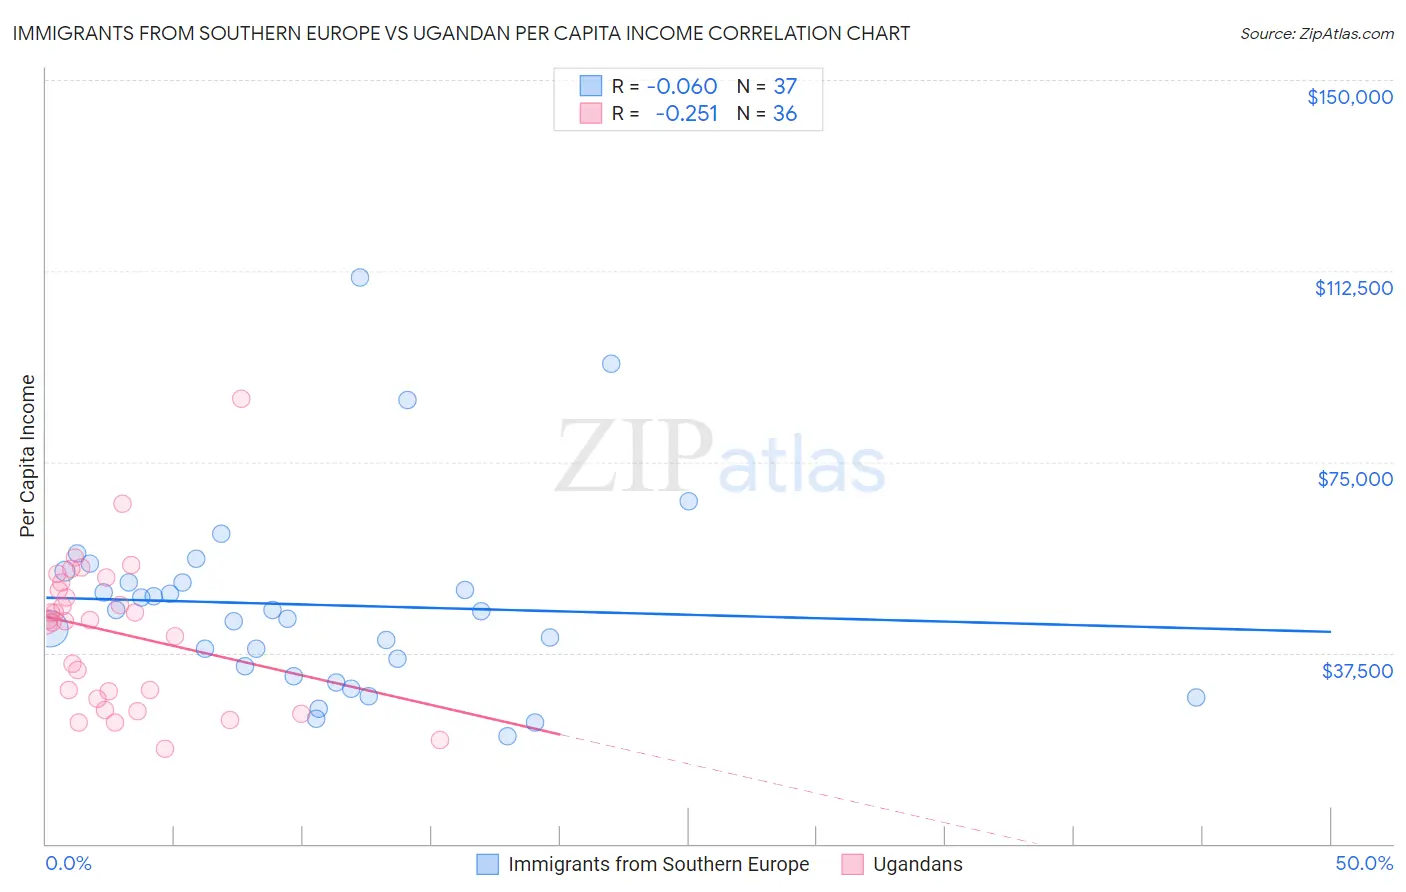 Immigrants from Southern Europe vs Ugandan Per Capita Income